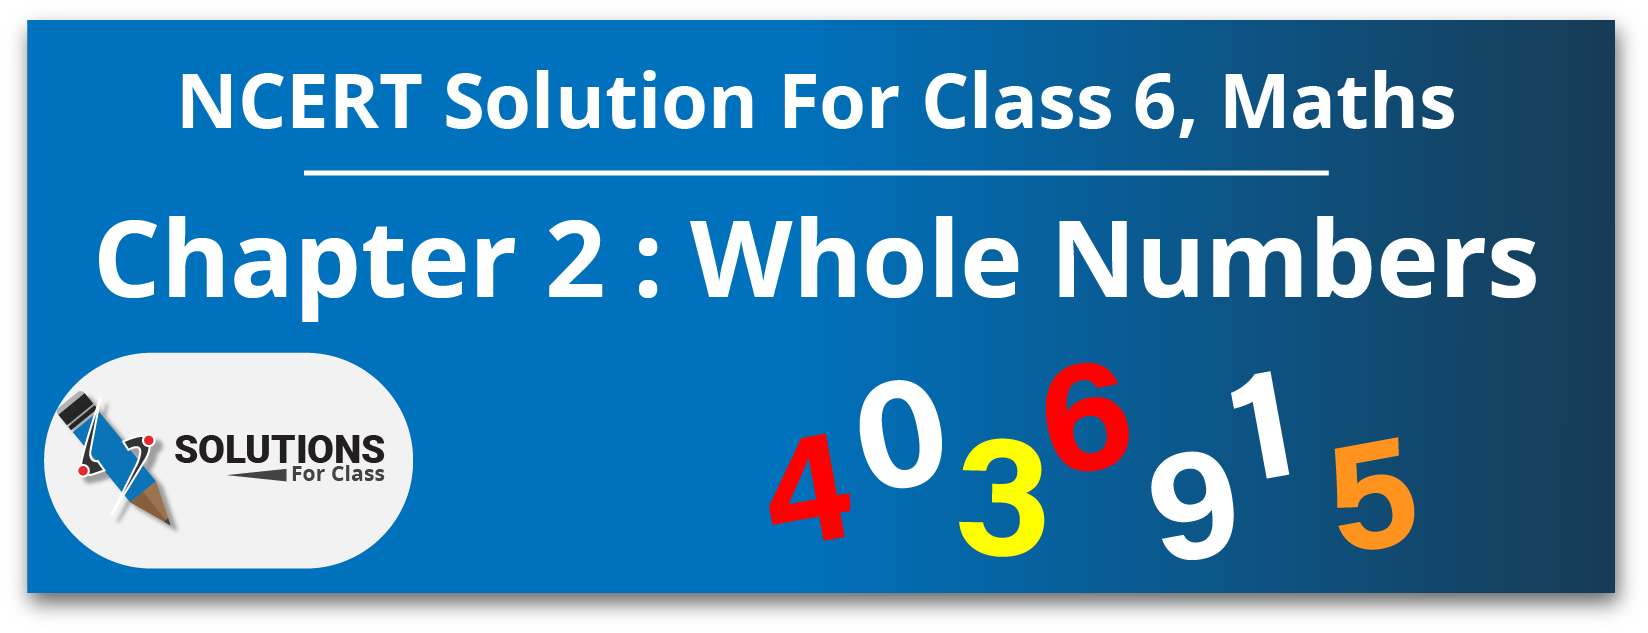 NCERT Solution For Class 6, Maths, Chapter 2 Whole Numbers, CBSE Class 6 maths, chapter 2